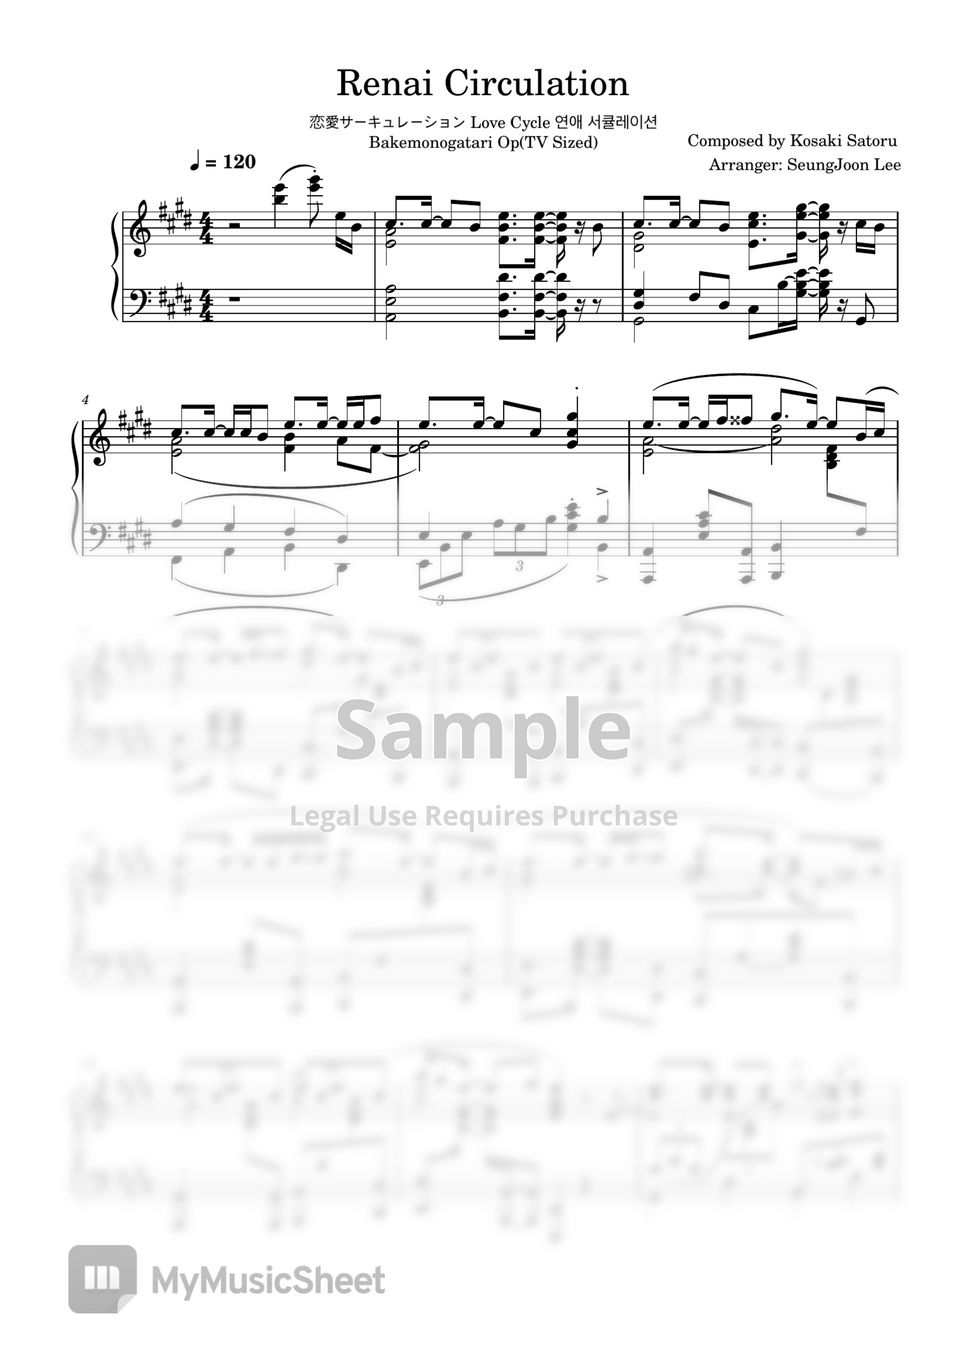 Kosaki Satoru - Renai Circulation (Piano) by SeungJoon Lee